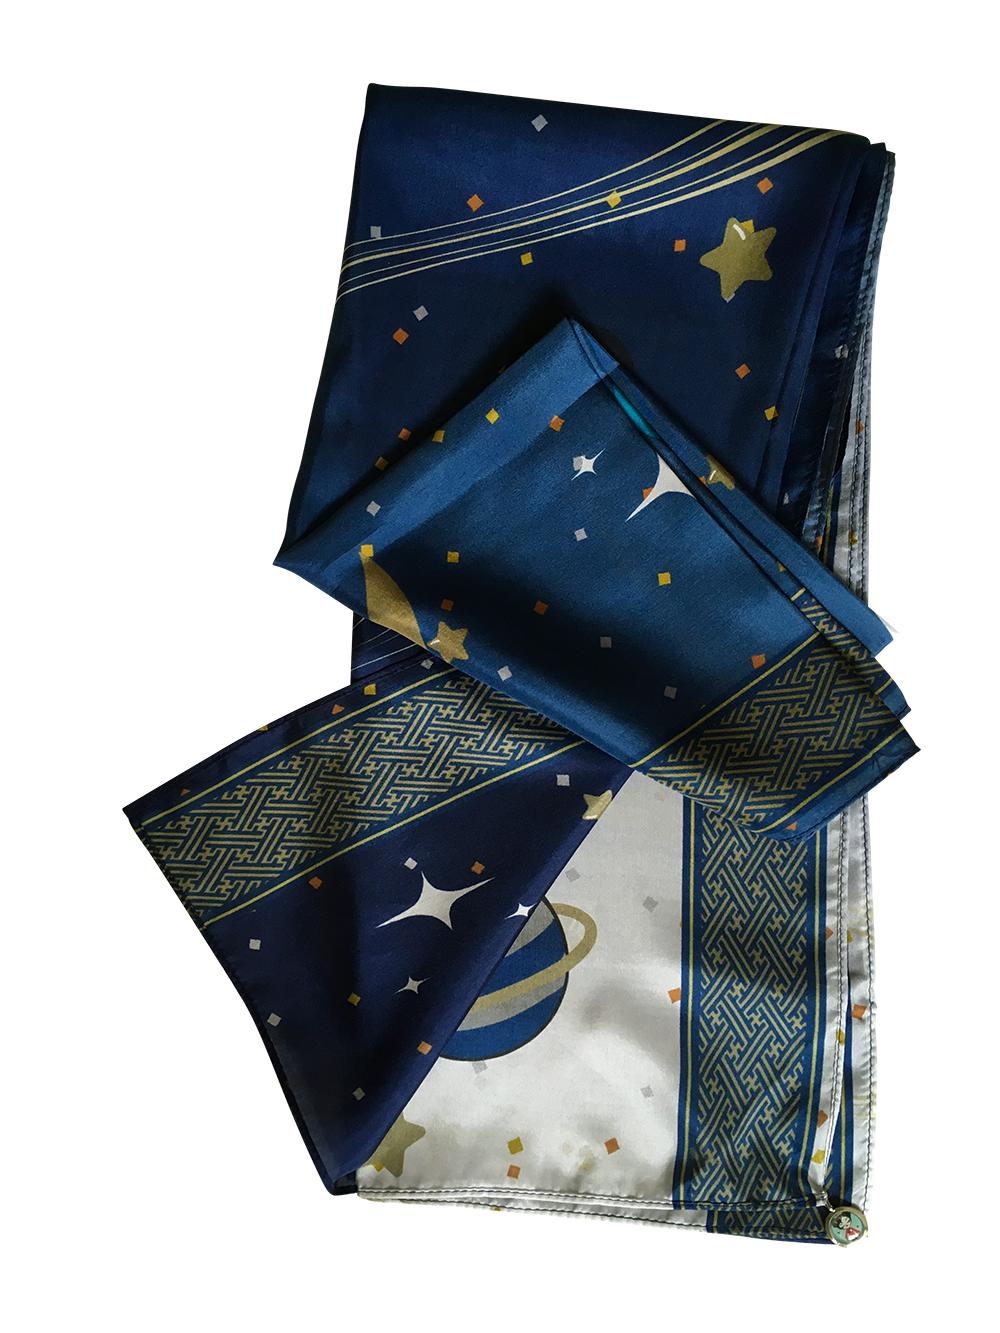 Spacegirl silk scarf